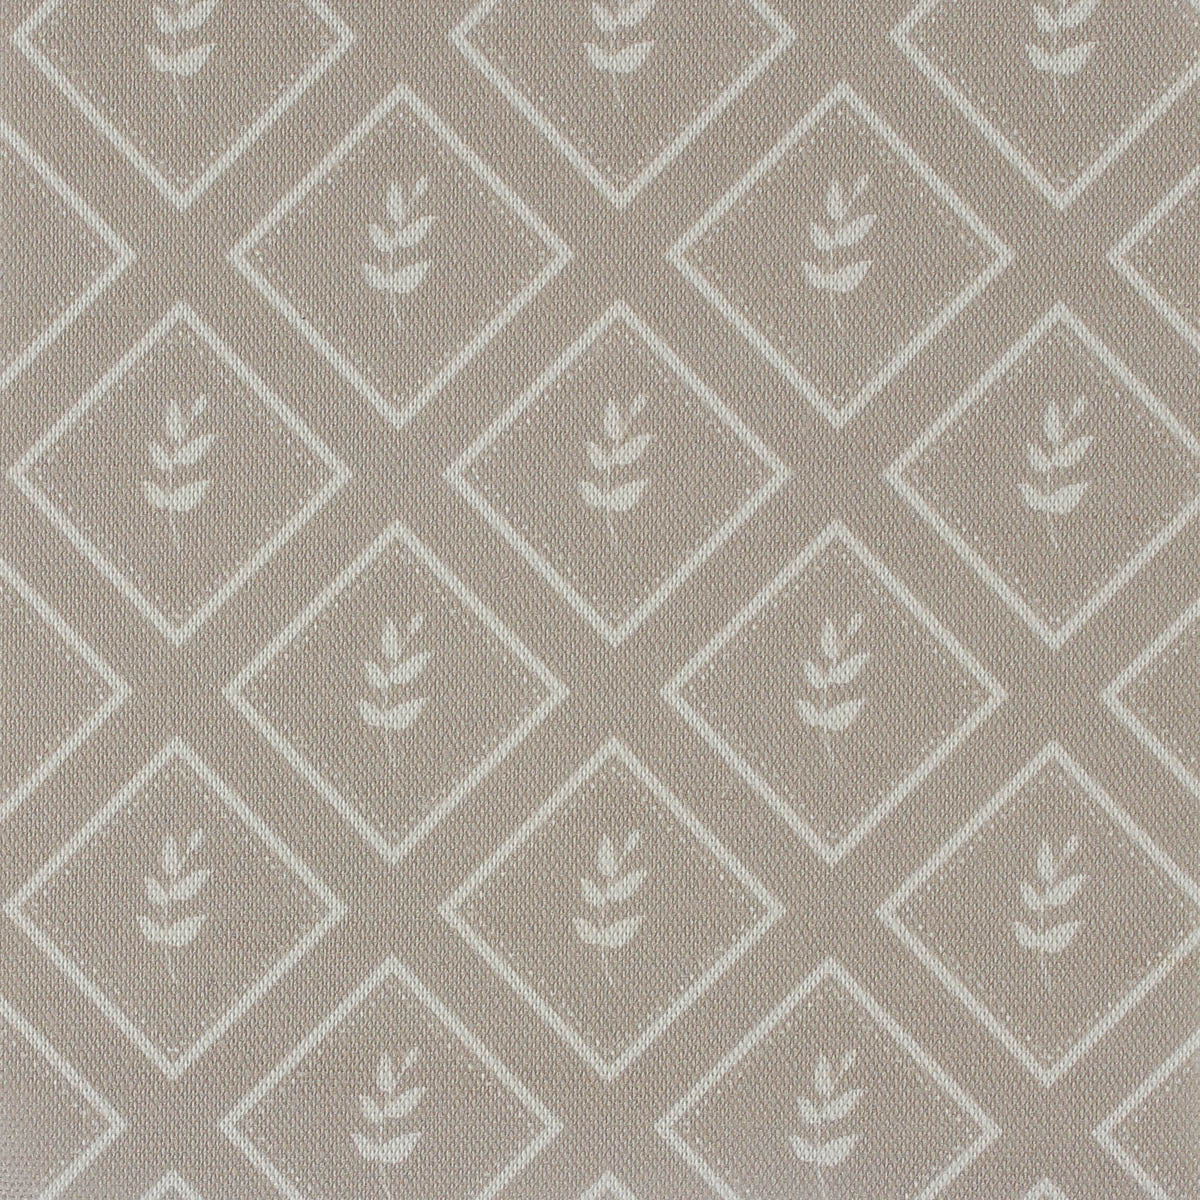 Little Leaf Reverse Fabric - Linen - Hydrangea Lane Home